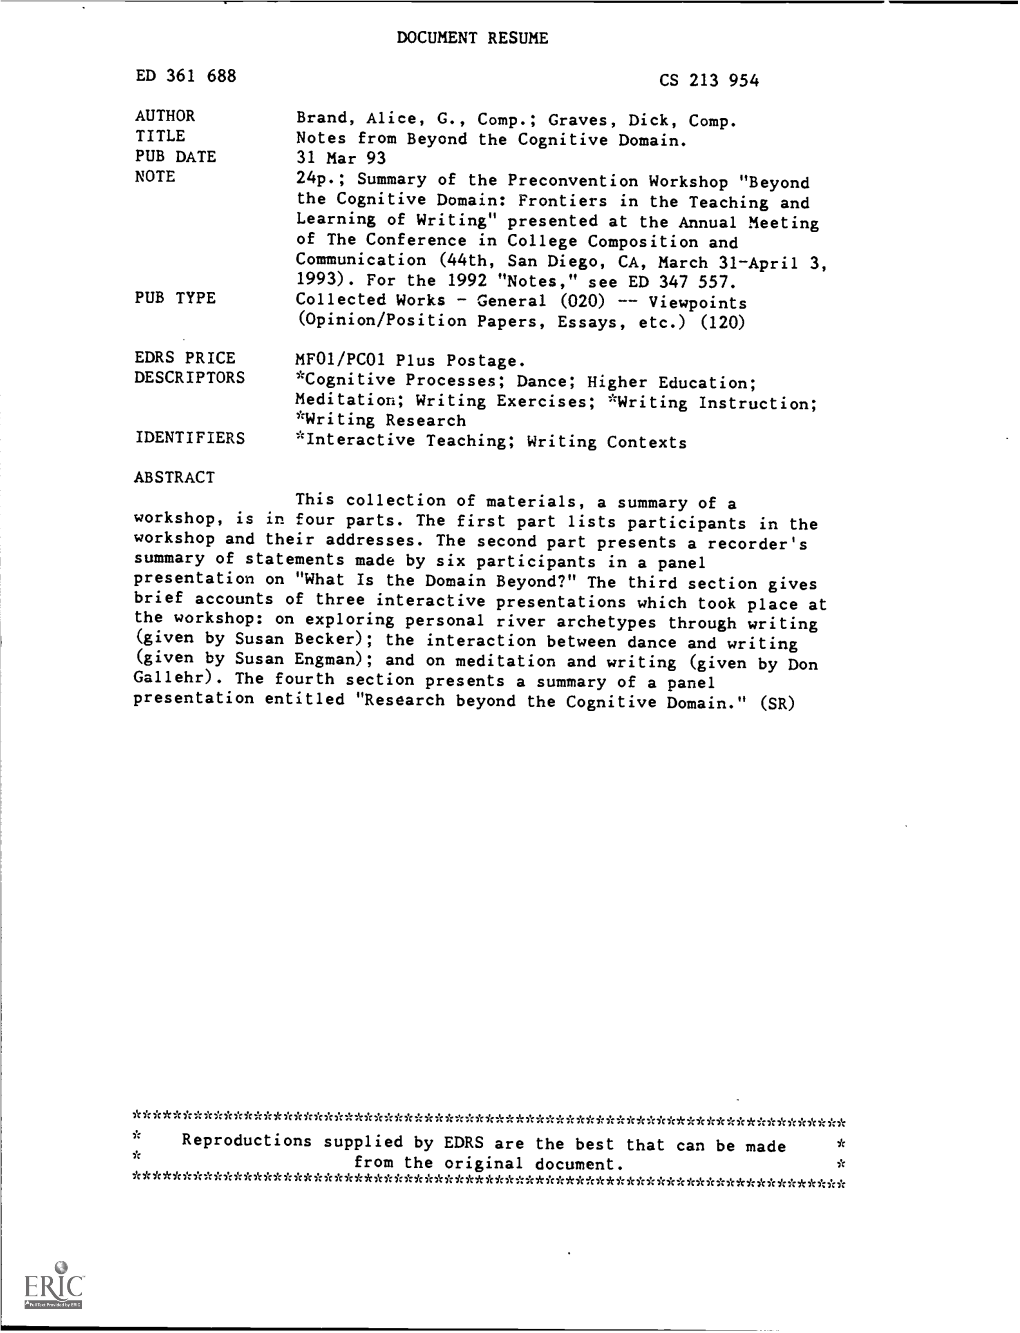 Communication (44Th, San Diego, CA, March 31April 3, 1993)